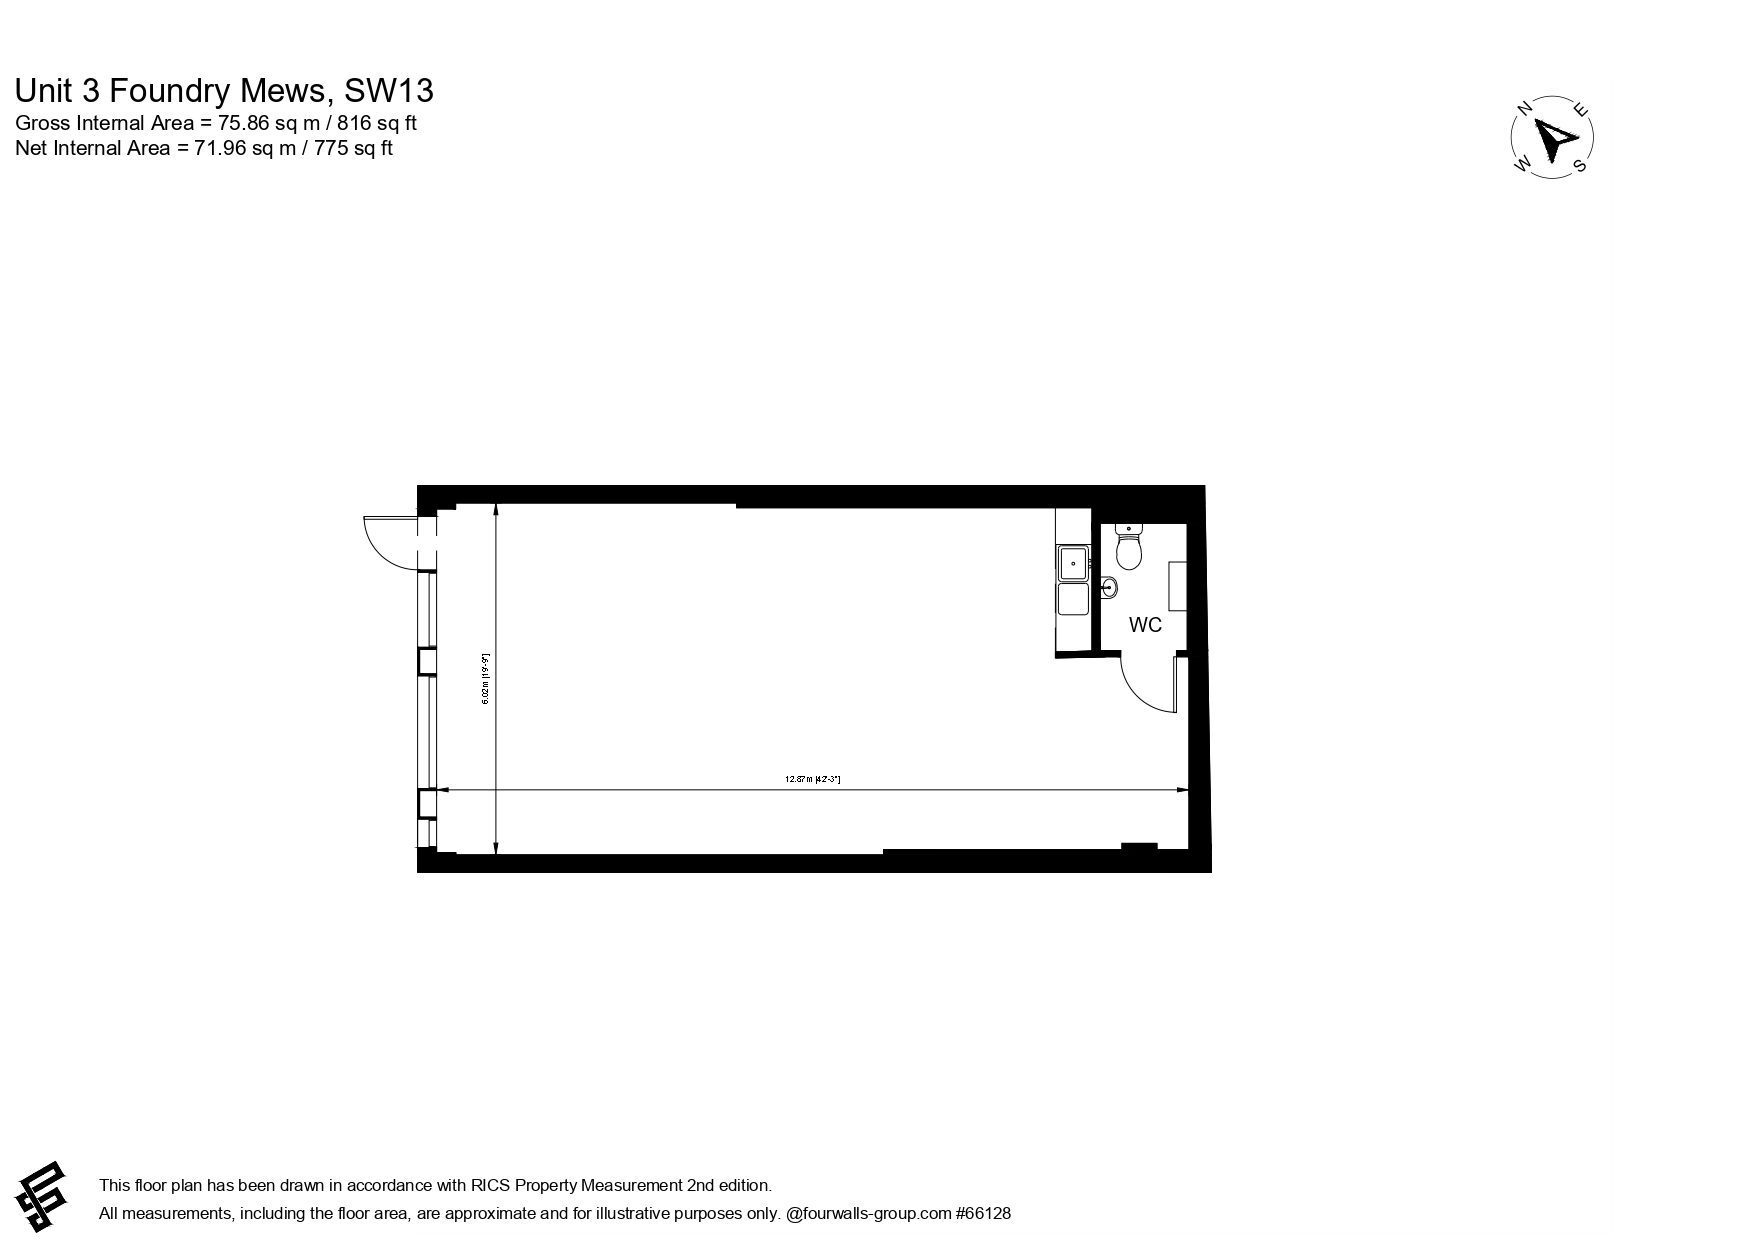 Unit 3 NIA floorplan page 0001